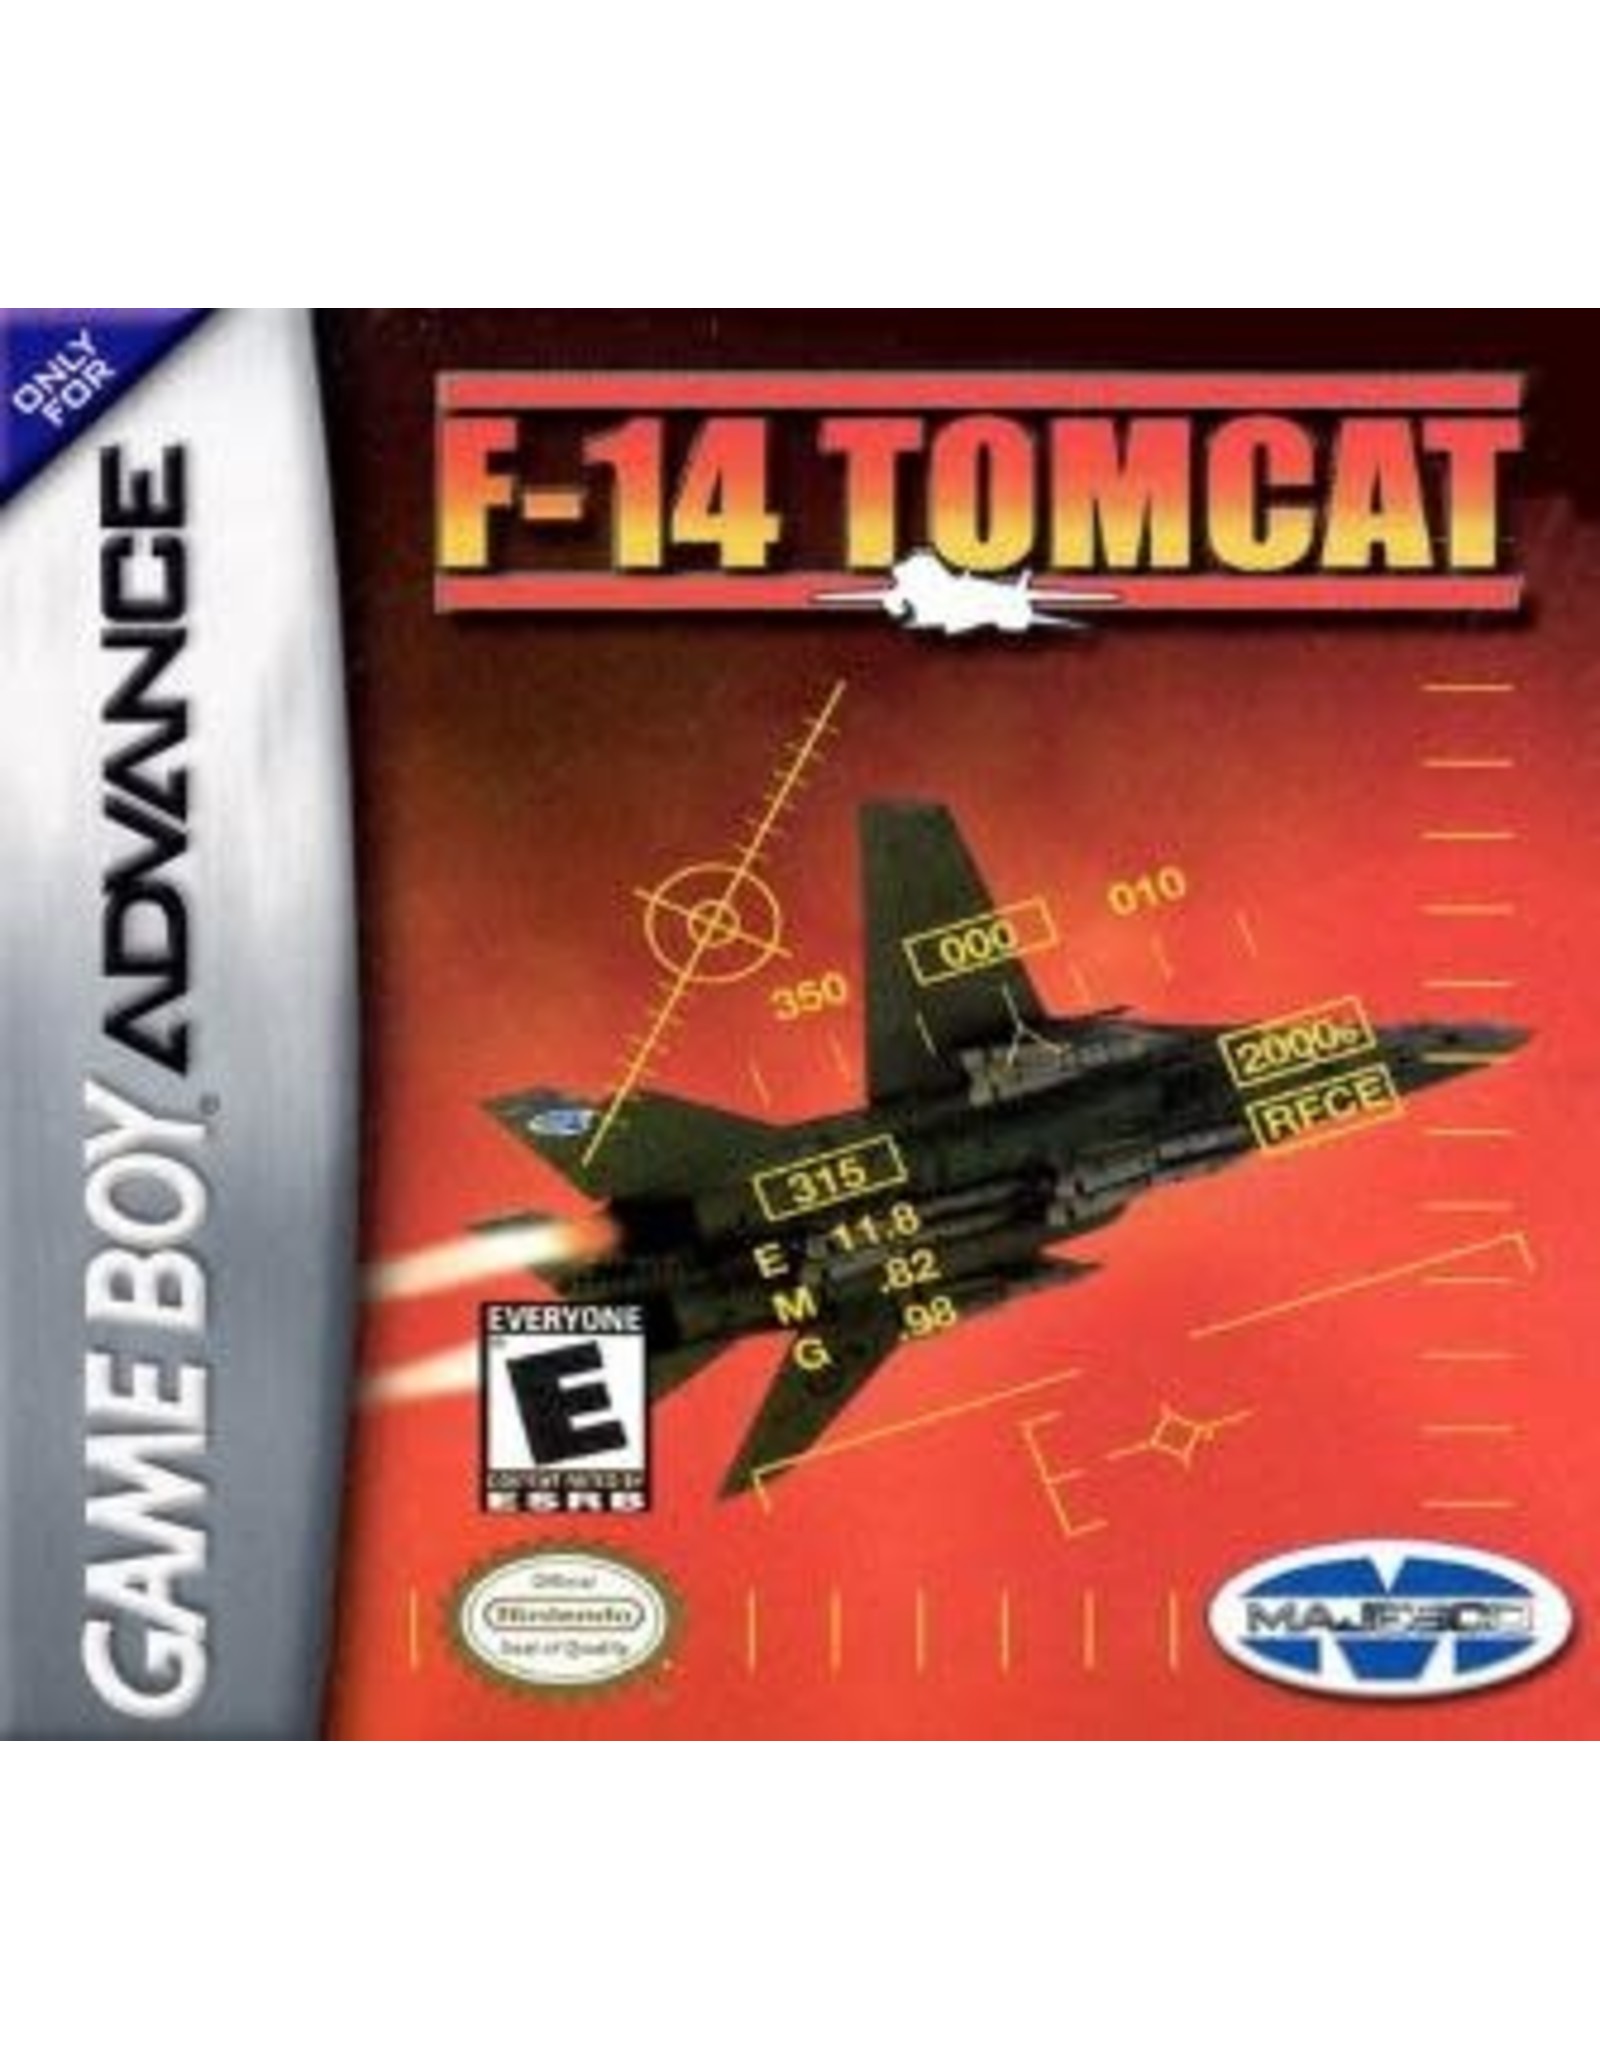 Game Boy Advance F-14 Tomcat (Damaged Label, Cart Only)